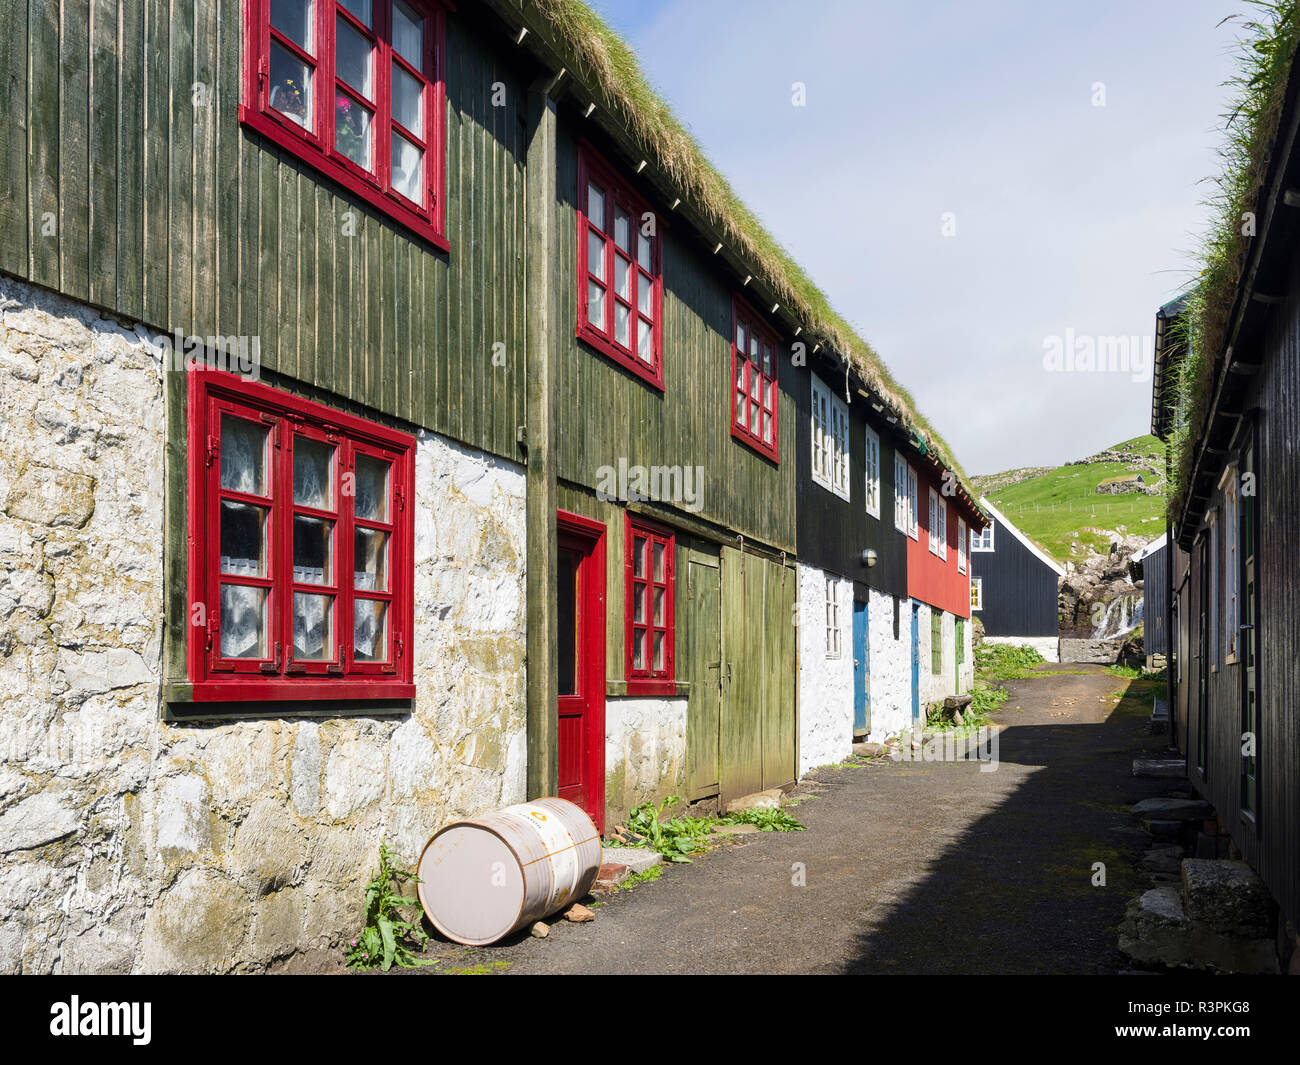 The Village On Island Mykines, Part Of The Faroe Islands In The North Atlantic. Denmark Stock Photo